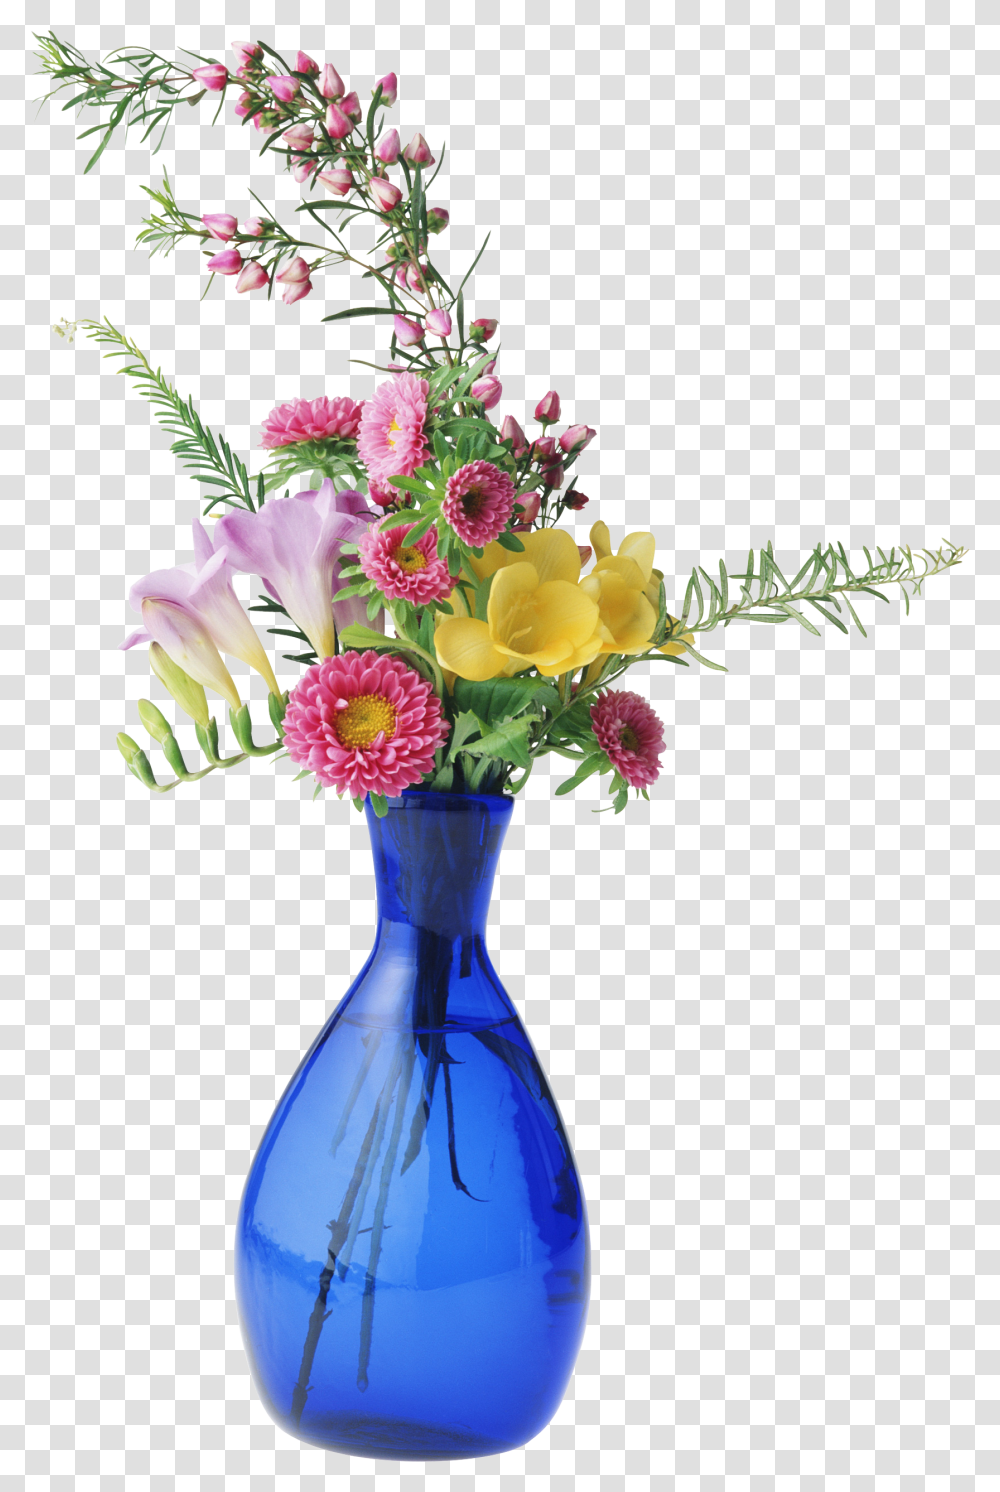 Vase Images Free Download, Plant, Flower, Blossom, Flower Bouquet Transparent Png